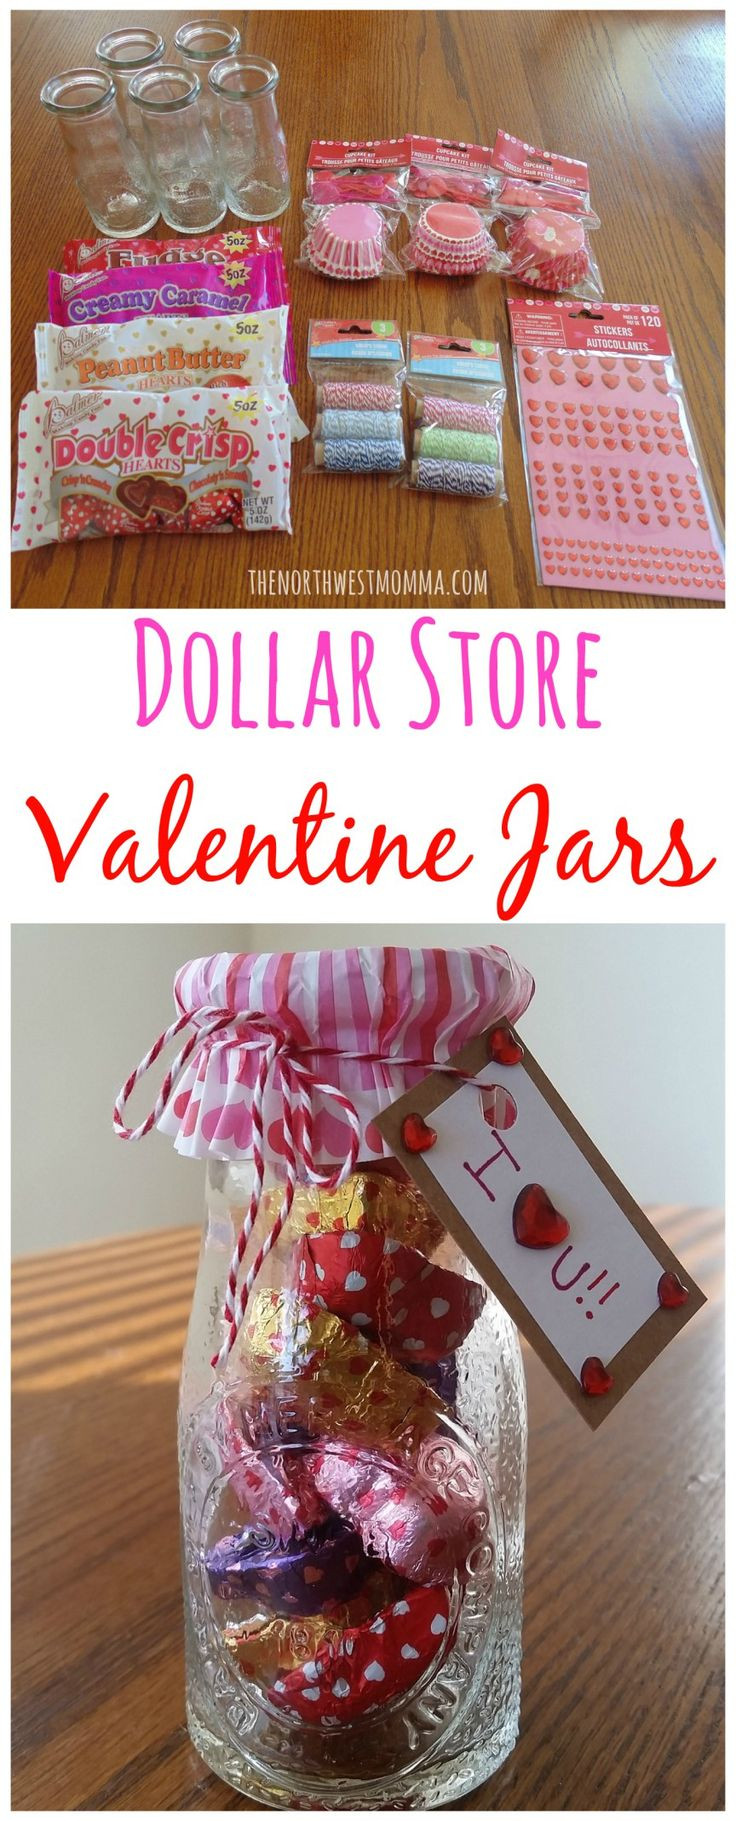 Valentine Gift Ideas Pinterest
 12 best images about Valentines Day on Pinterest